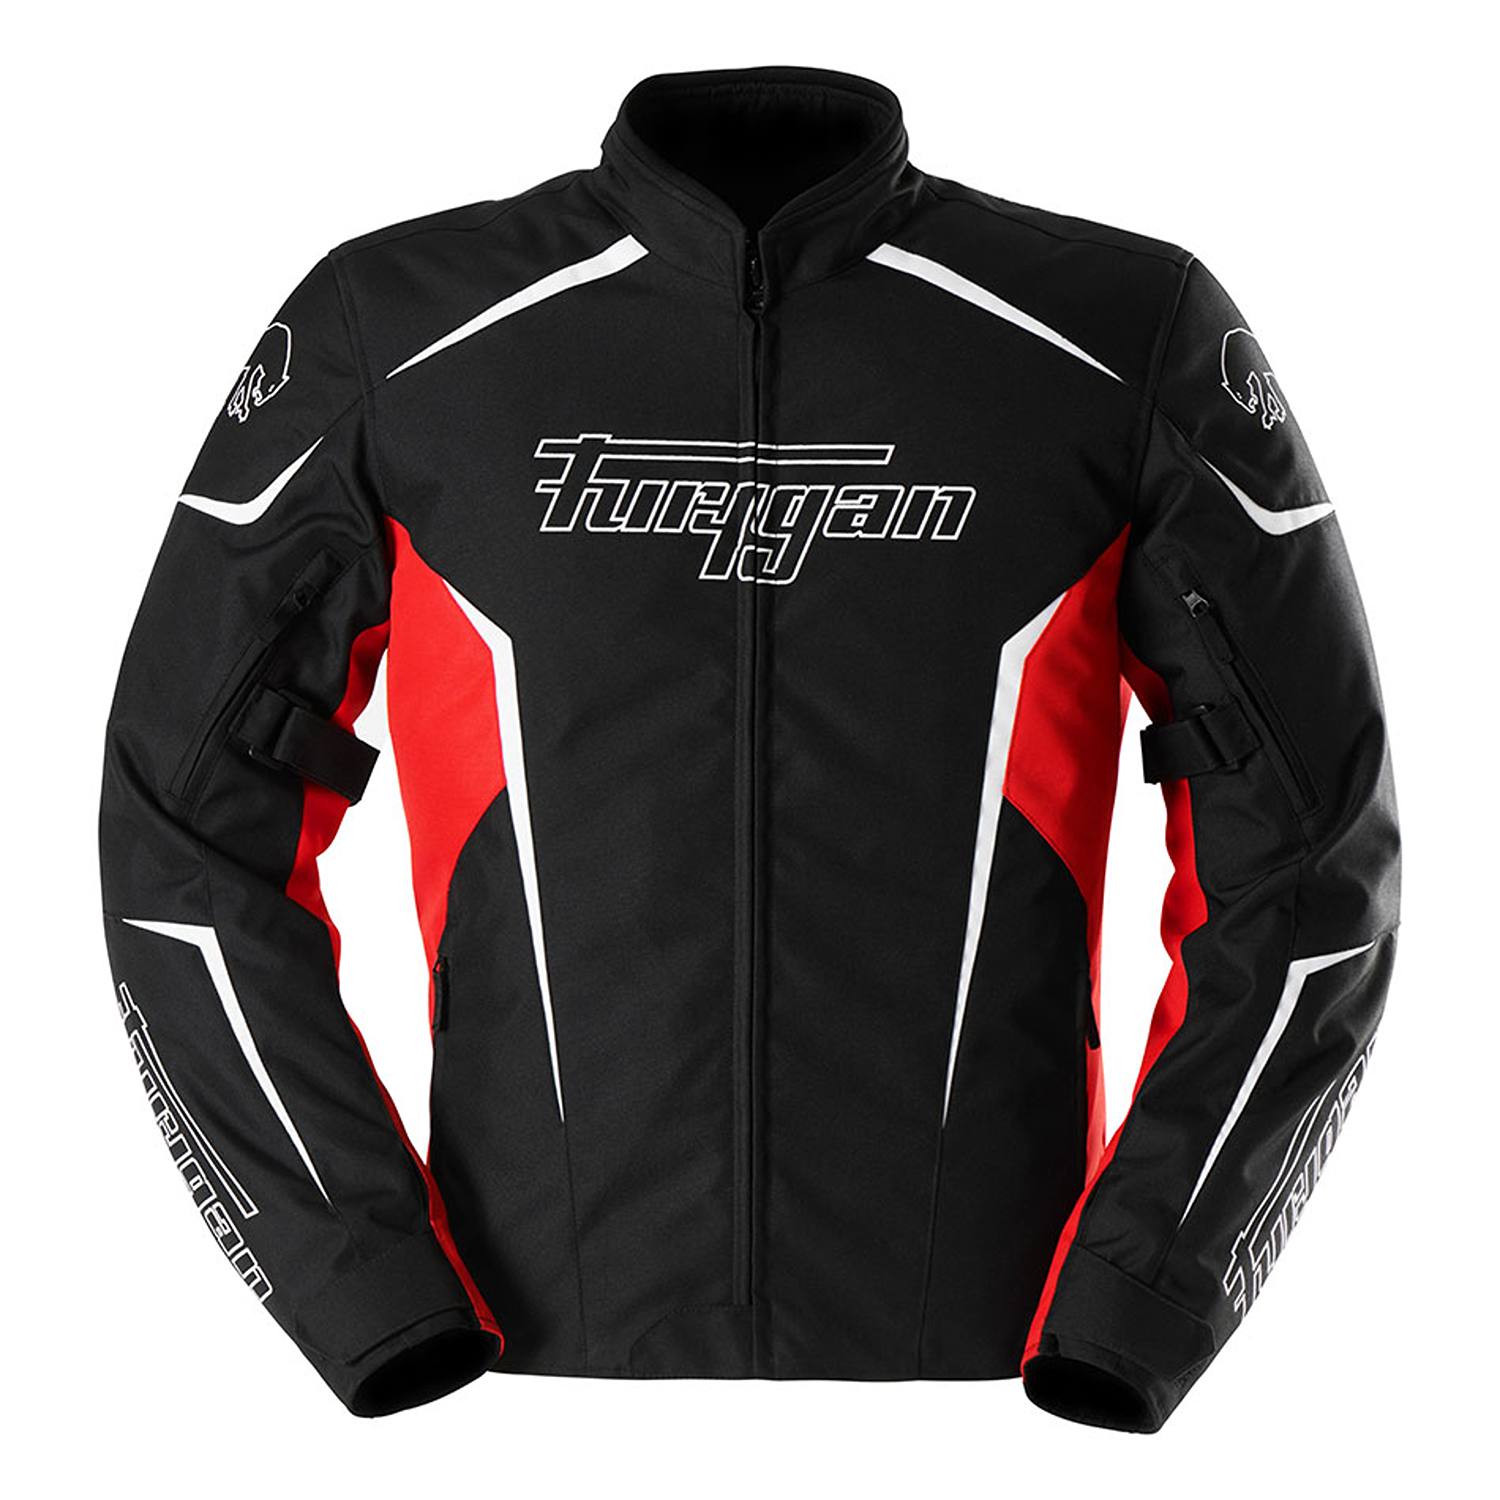 Image of Furygan Yori Jacket Black Grey Red Size 3XL ID 3435980354701